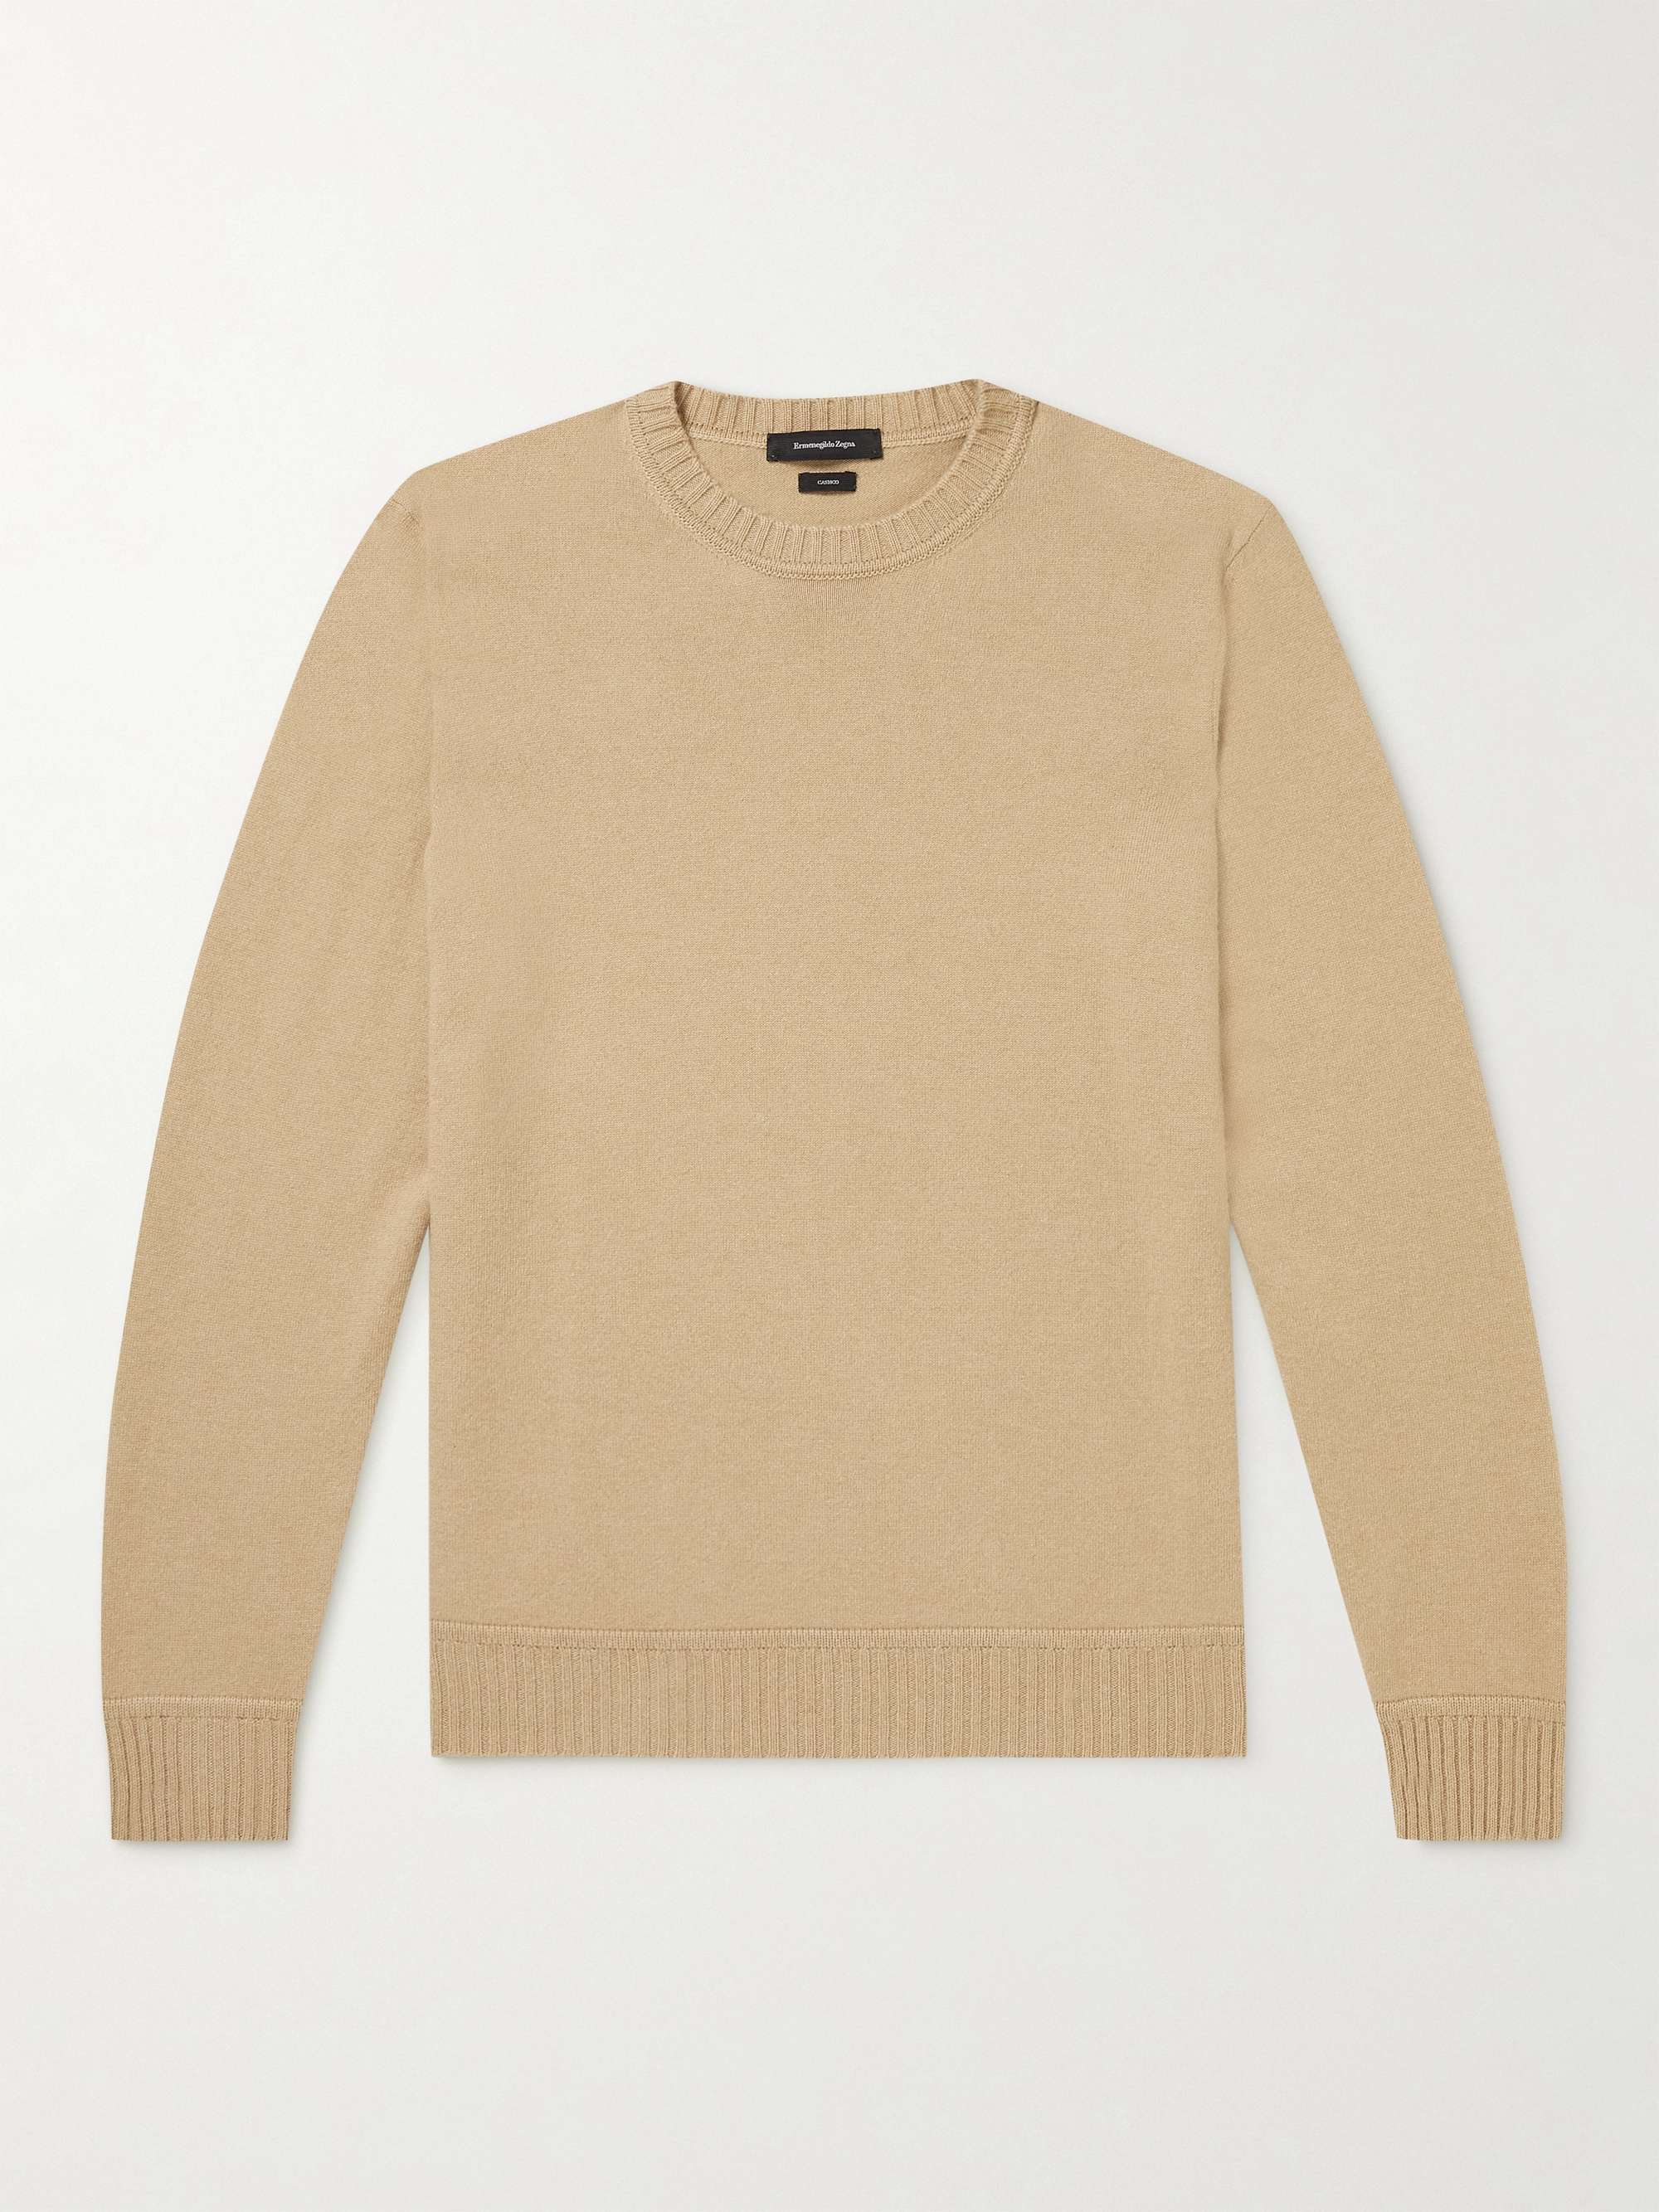 ERMENEGILDO ZEGNA Cotton and Cashmere-Blend Sweater